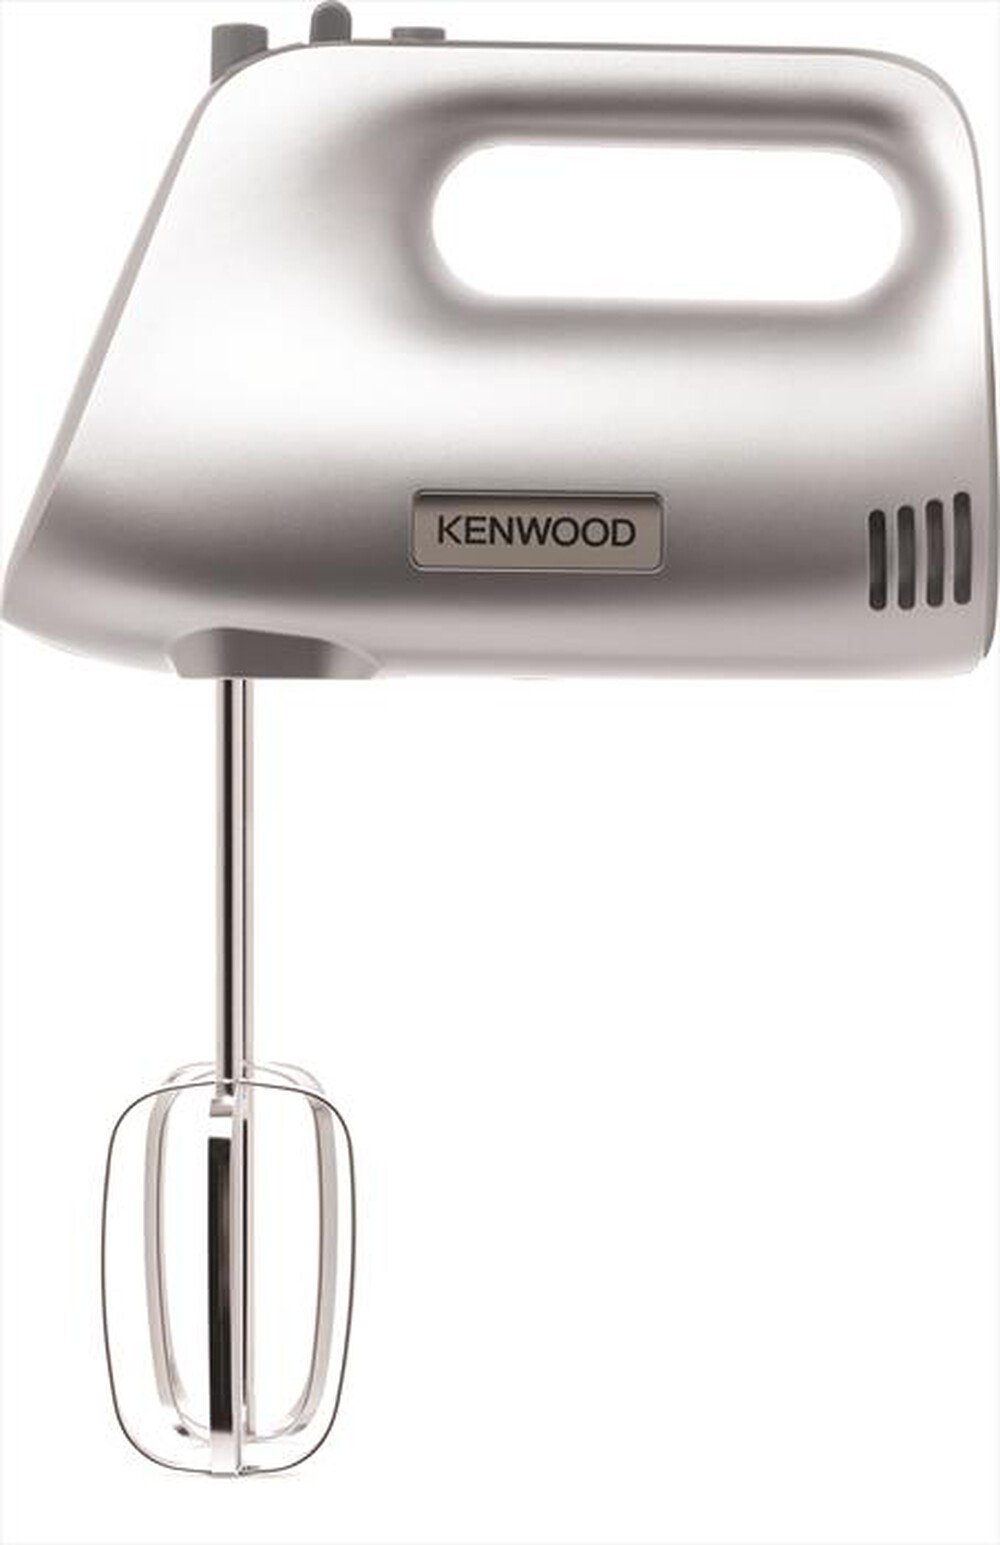 "KENWOOD. - HMP30.A0SI-Silver"